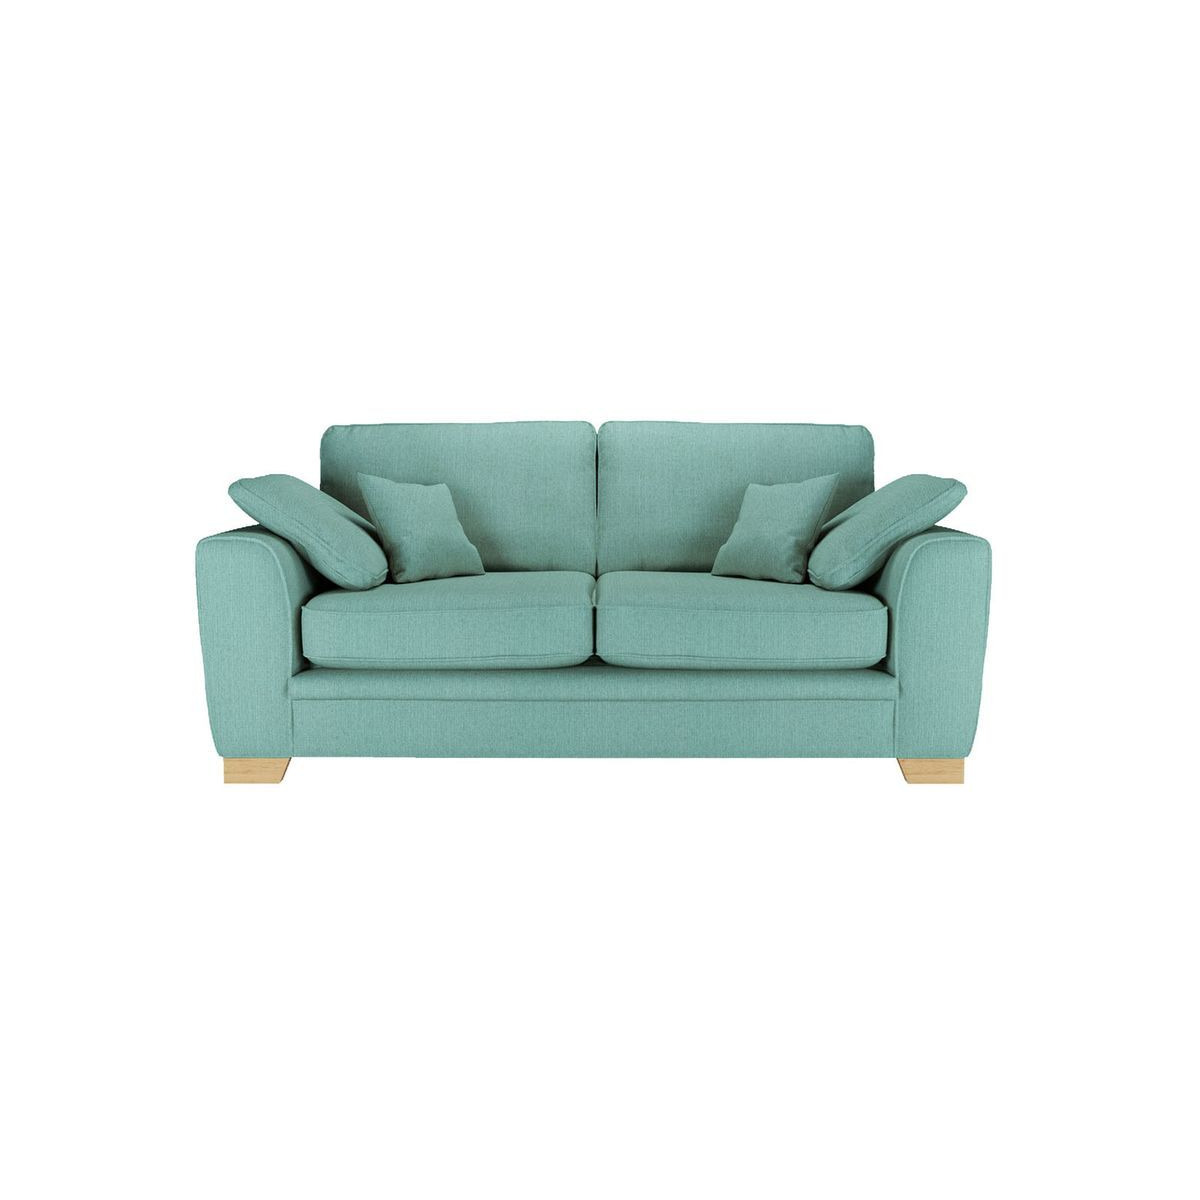 Ronay 2-seater Sofa, turquoise, Leg colour: like oak - image 1